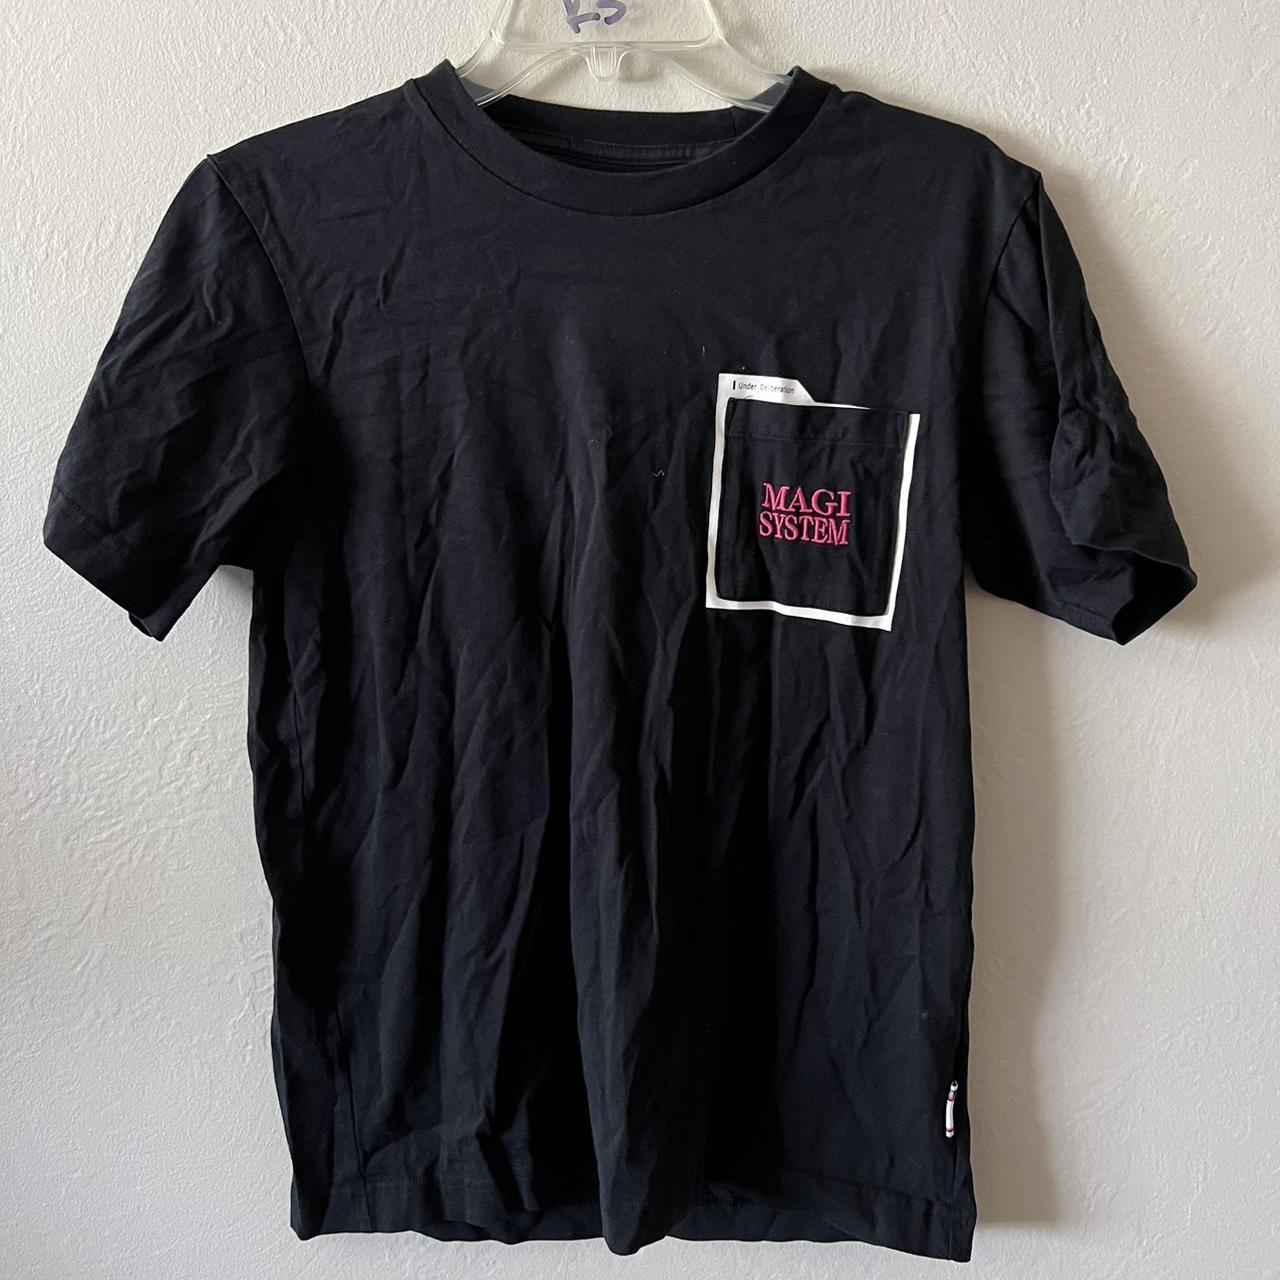 UNIQLO Men's Black and Pink T-shirt | Depop